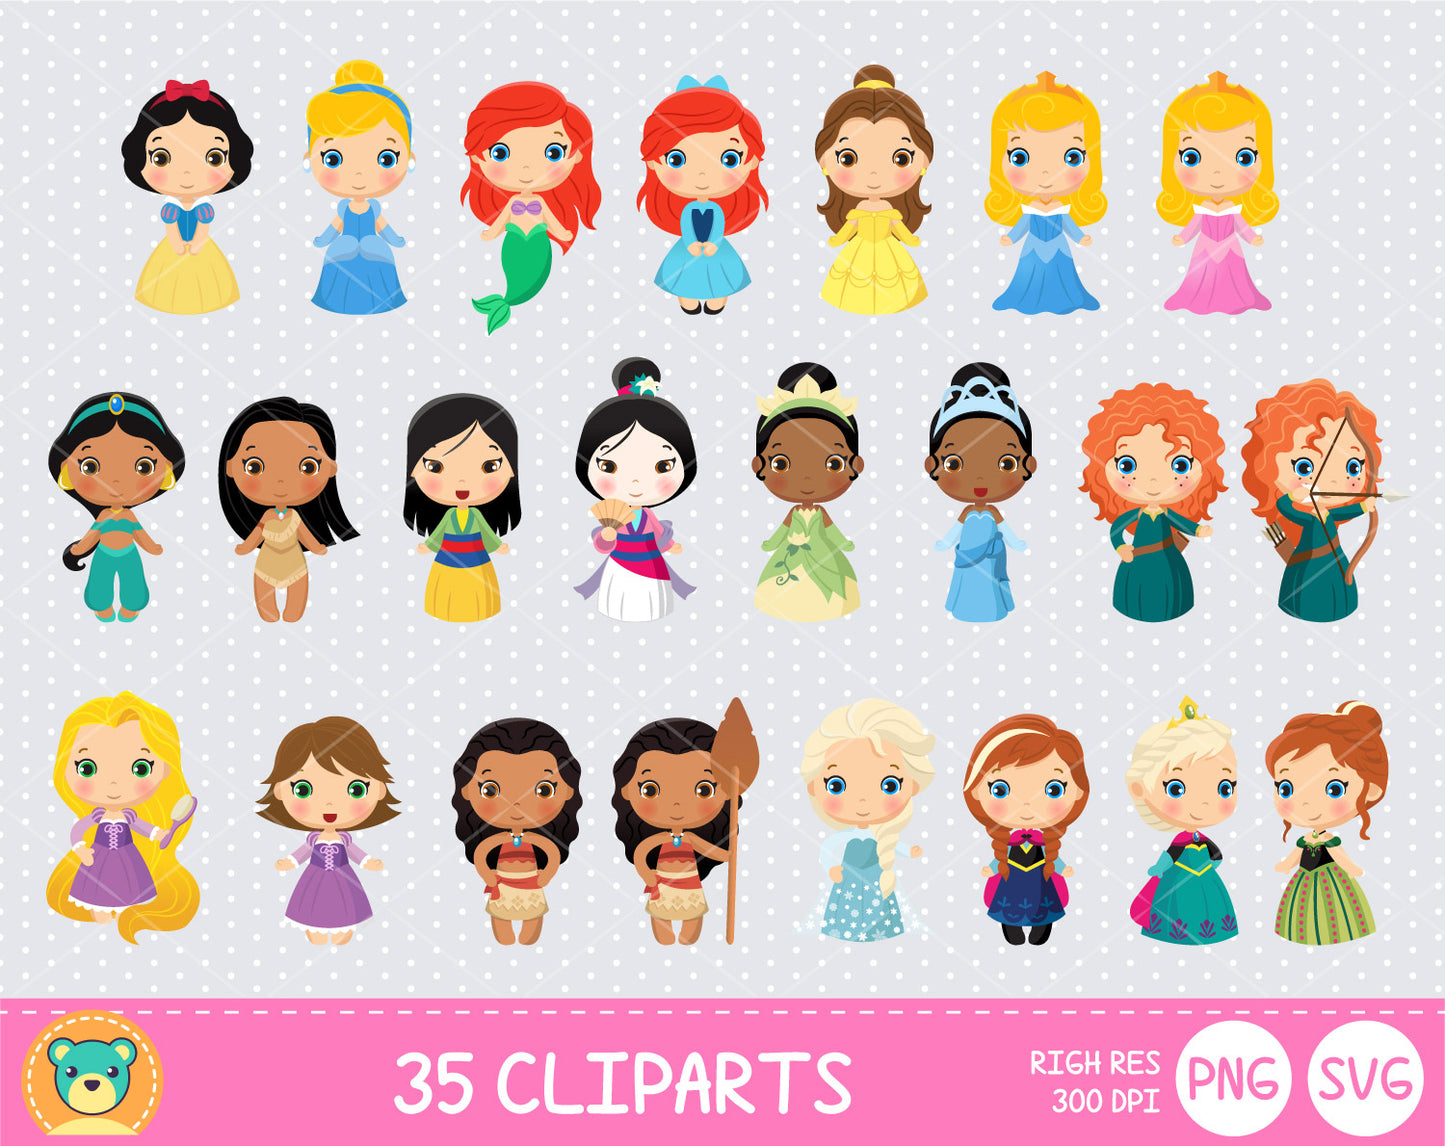 Cute Princess clipart set, Disney Princess clip art for decoration, scrapbooking, instant download